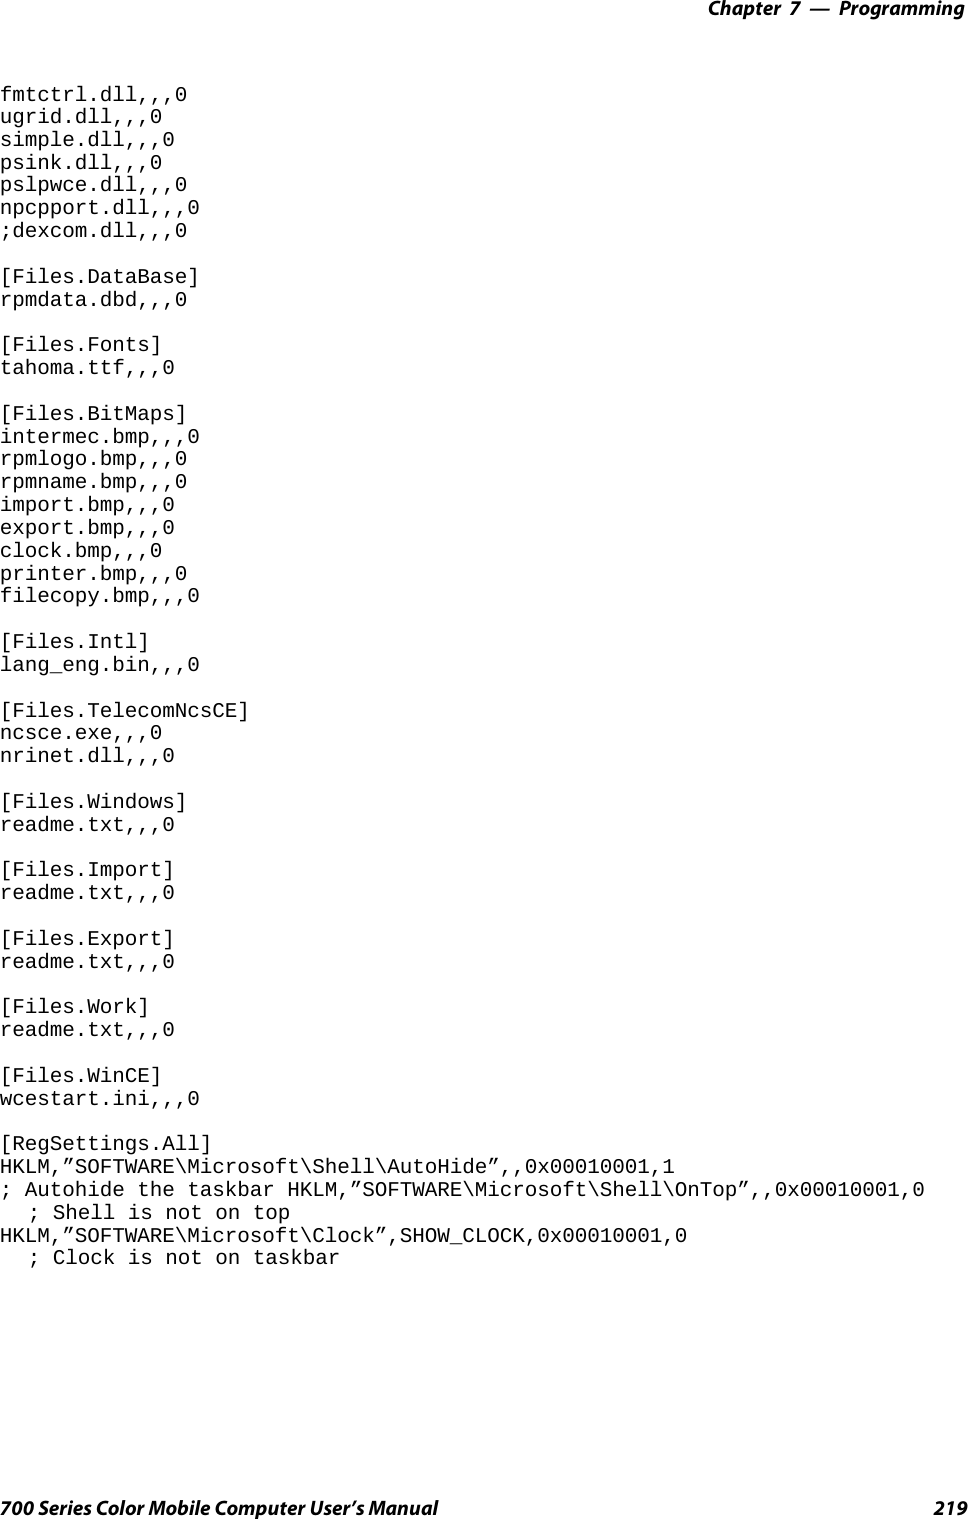 Programming—Chapter 7219700 Series Color Mobile Computer User’s Manualfmtctrl.dll,,,0ugrid.dll,,,0simple.dll,,,0psink.dll,,,0pslpwce.dll,,,0npcpport.dll,,,0;dexcom.dll,,,0[Files.DataBase]rpmdata.dbd,,,0[Files.Fonts]tahoma.ttf,,,0[Files.BitMaps]intermec.bmp,,,0rpmlogo.bmp,,,0rpmname.bmp,,,0import.bmp,,,0export.bmp,,,0clock.bmp,,,0printer.bmp,,,0filecopy.bmp,,,0[Files.Intl]lang_eng.bin,,,0[Files.TelecomNcsCE]ncsce.exe,,,0nrinet.dll,,,0[Files.Windows]readme.txt,,,0[Files.Import]readme.txt,,,0[Files.Export]readme.txt,,,0[Files.Work]readme.txt,,,0[Files.WinCE]wcestart.ini,,,0[RegSettings.All]HKLM,”SOFTWARE\Microsoft\Shell\AutoHide”,,0x00010001,1; Autohide the taskbar HKLM,”SOFTWARE\Microsoft\Shell\OnTop”,,0x00010001,0; Shell is not on topHKLM,”SOFTWARE\Microsoft\Clock”,SHOW_CLOCK,0x00010001,0; Clock is not on taskbar